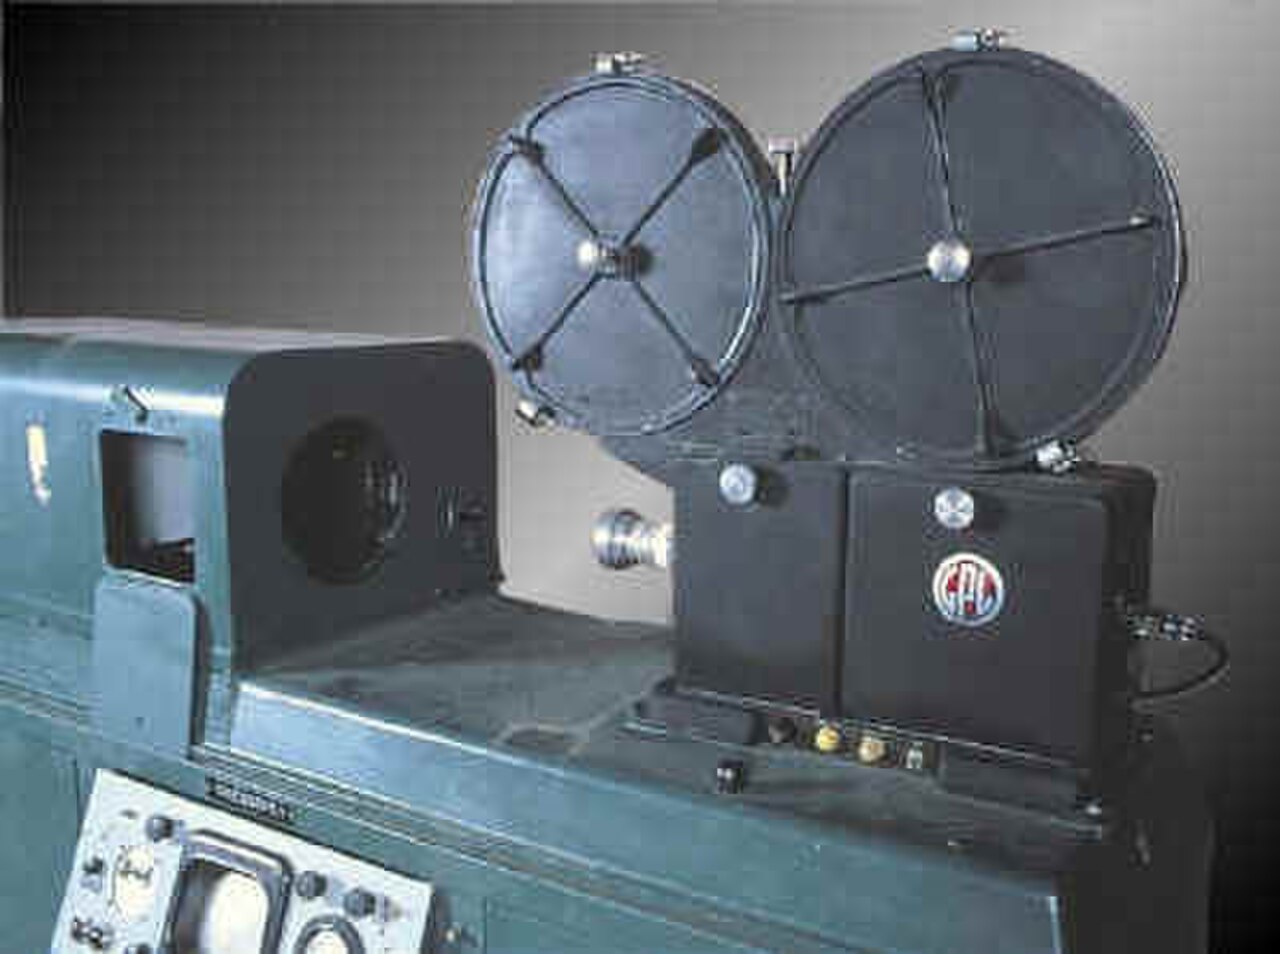 Https kinescope io. Kinescope. Kinescope платформа. Киноплёночный стереоскопический автомат. Kinescope лого.